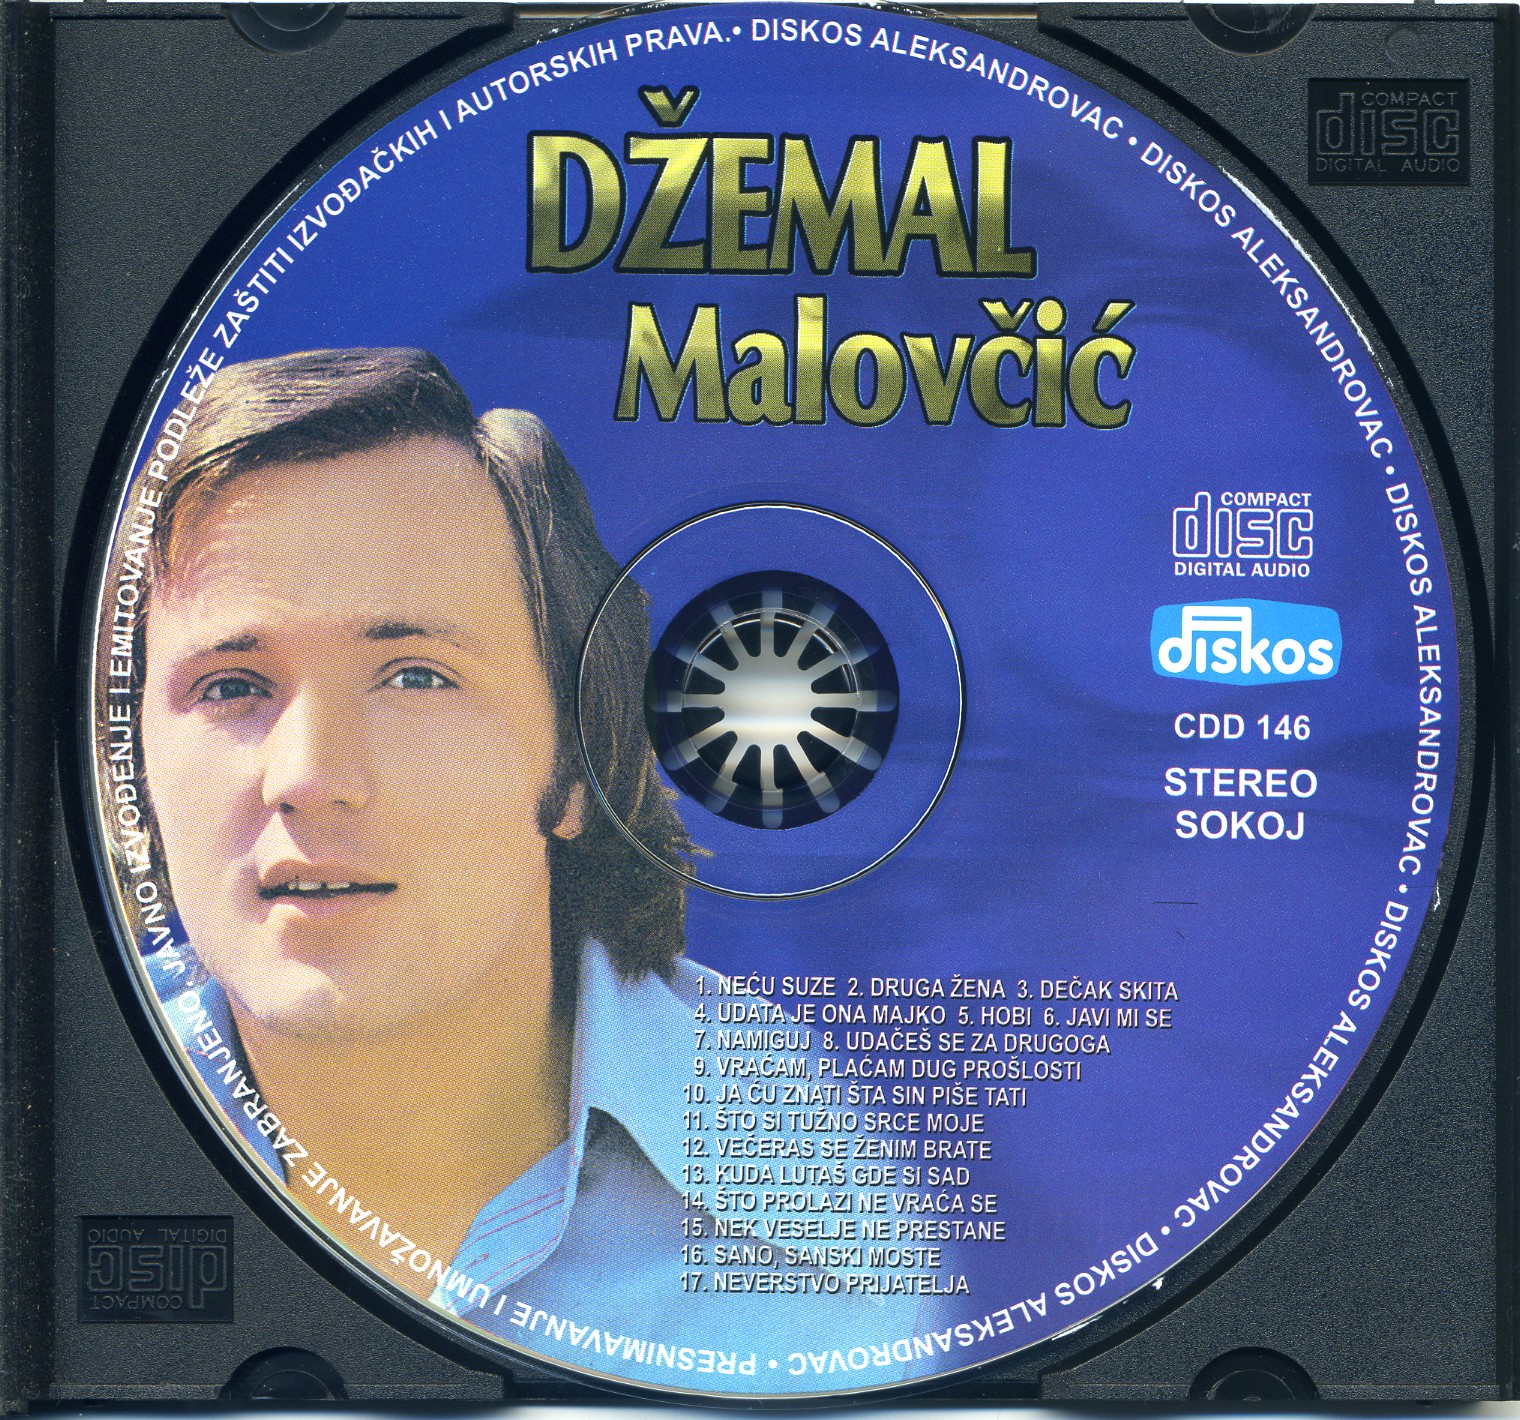 Dzemal Malovcic